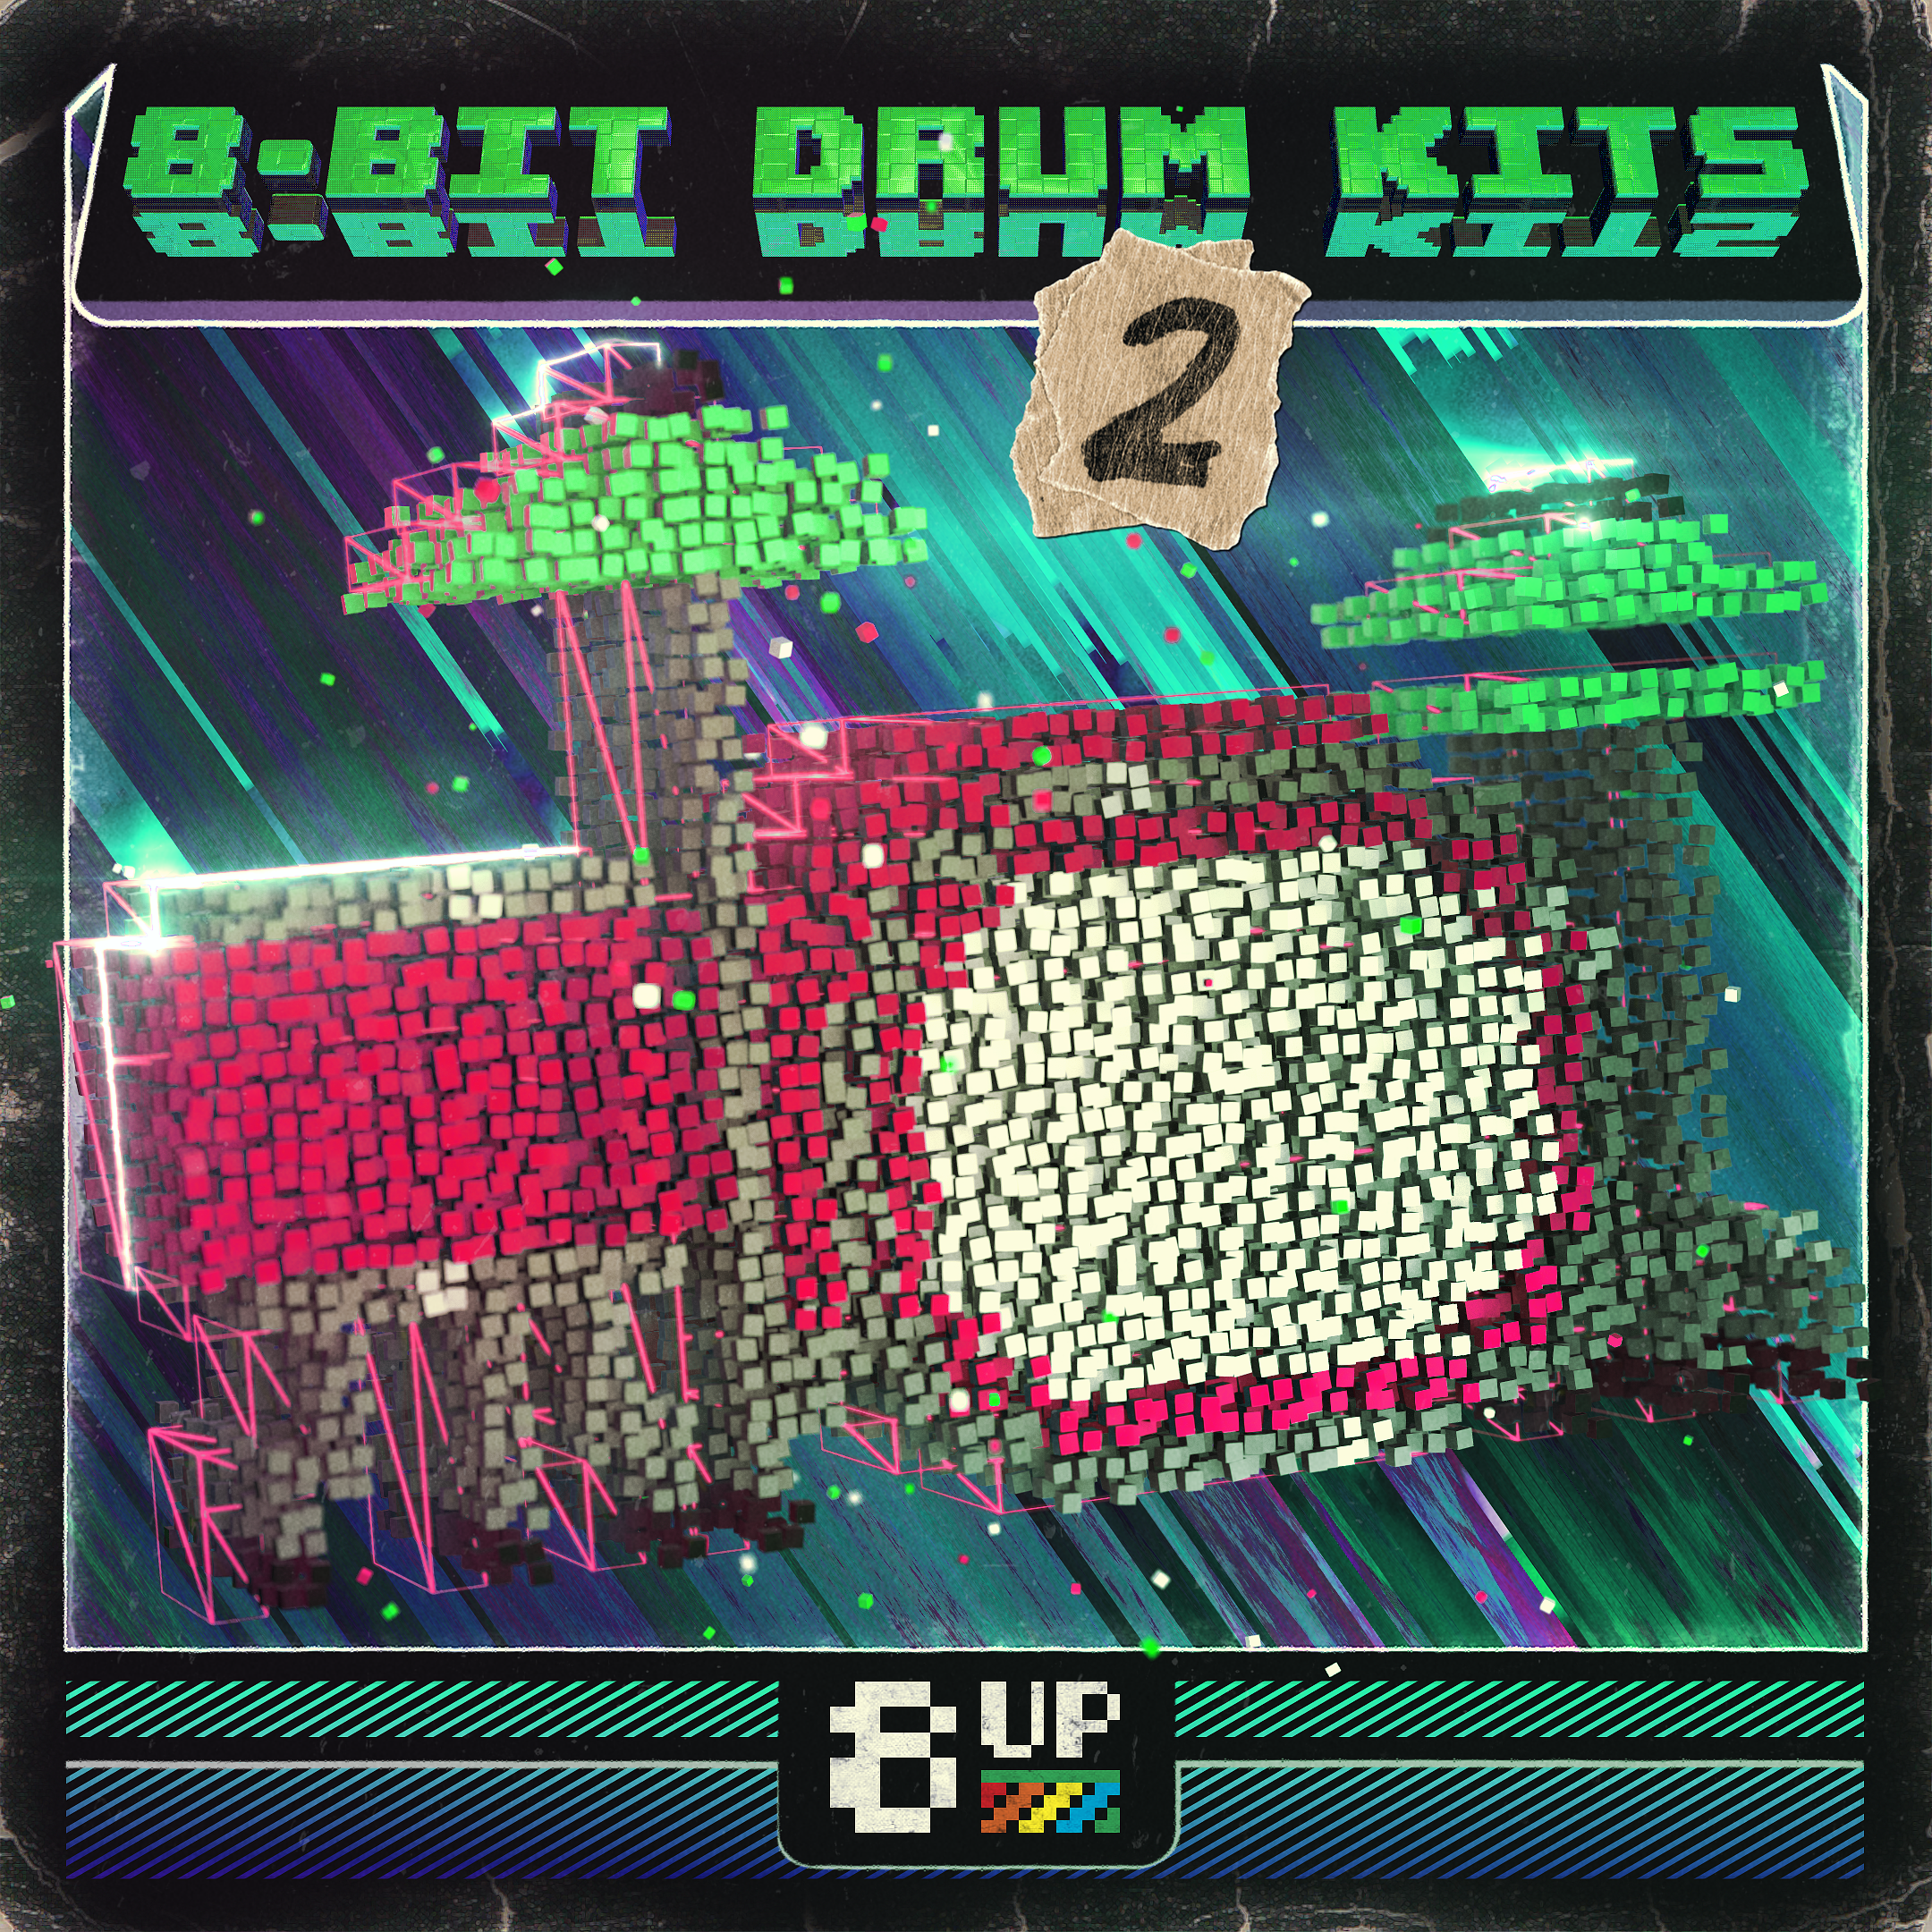 8-Bit Drum Kits 2 Packshot by 8UP